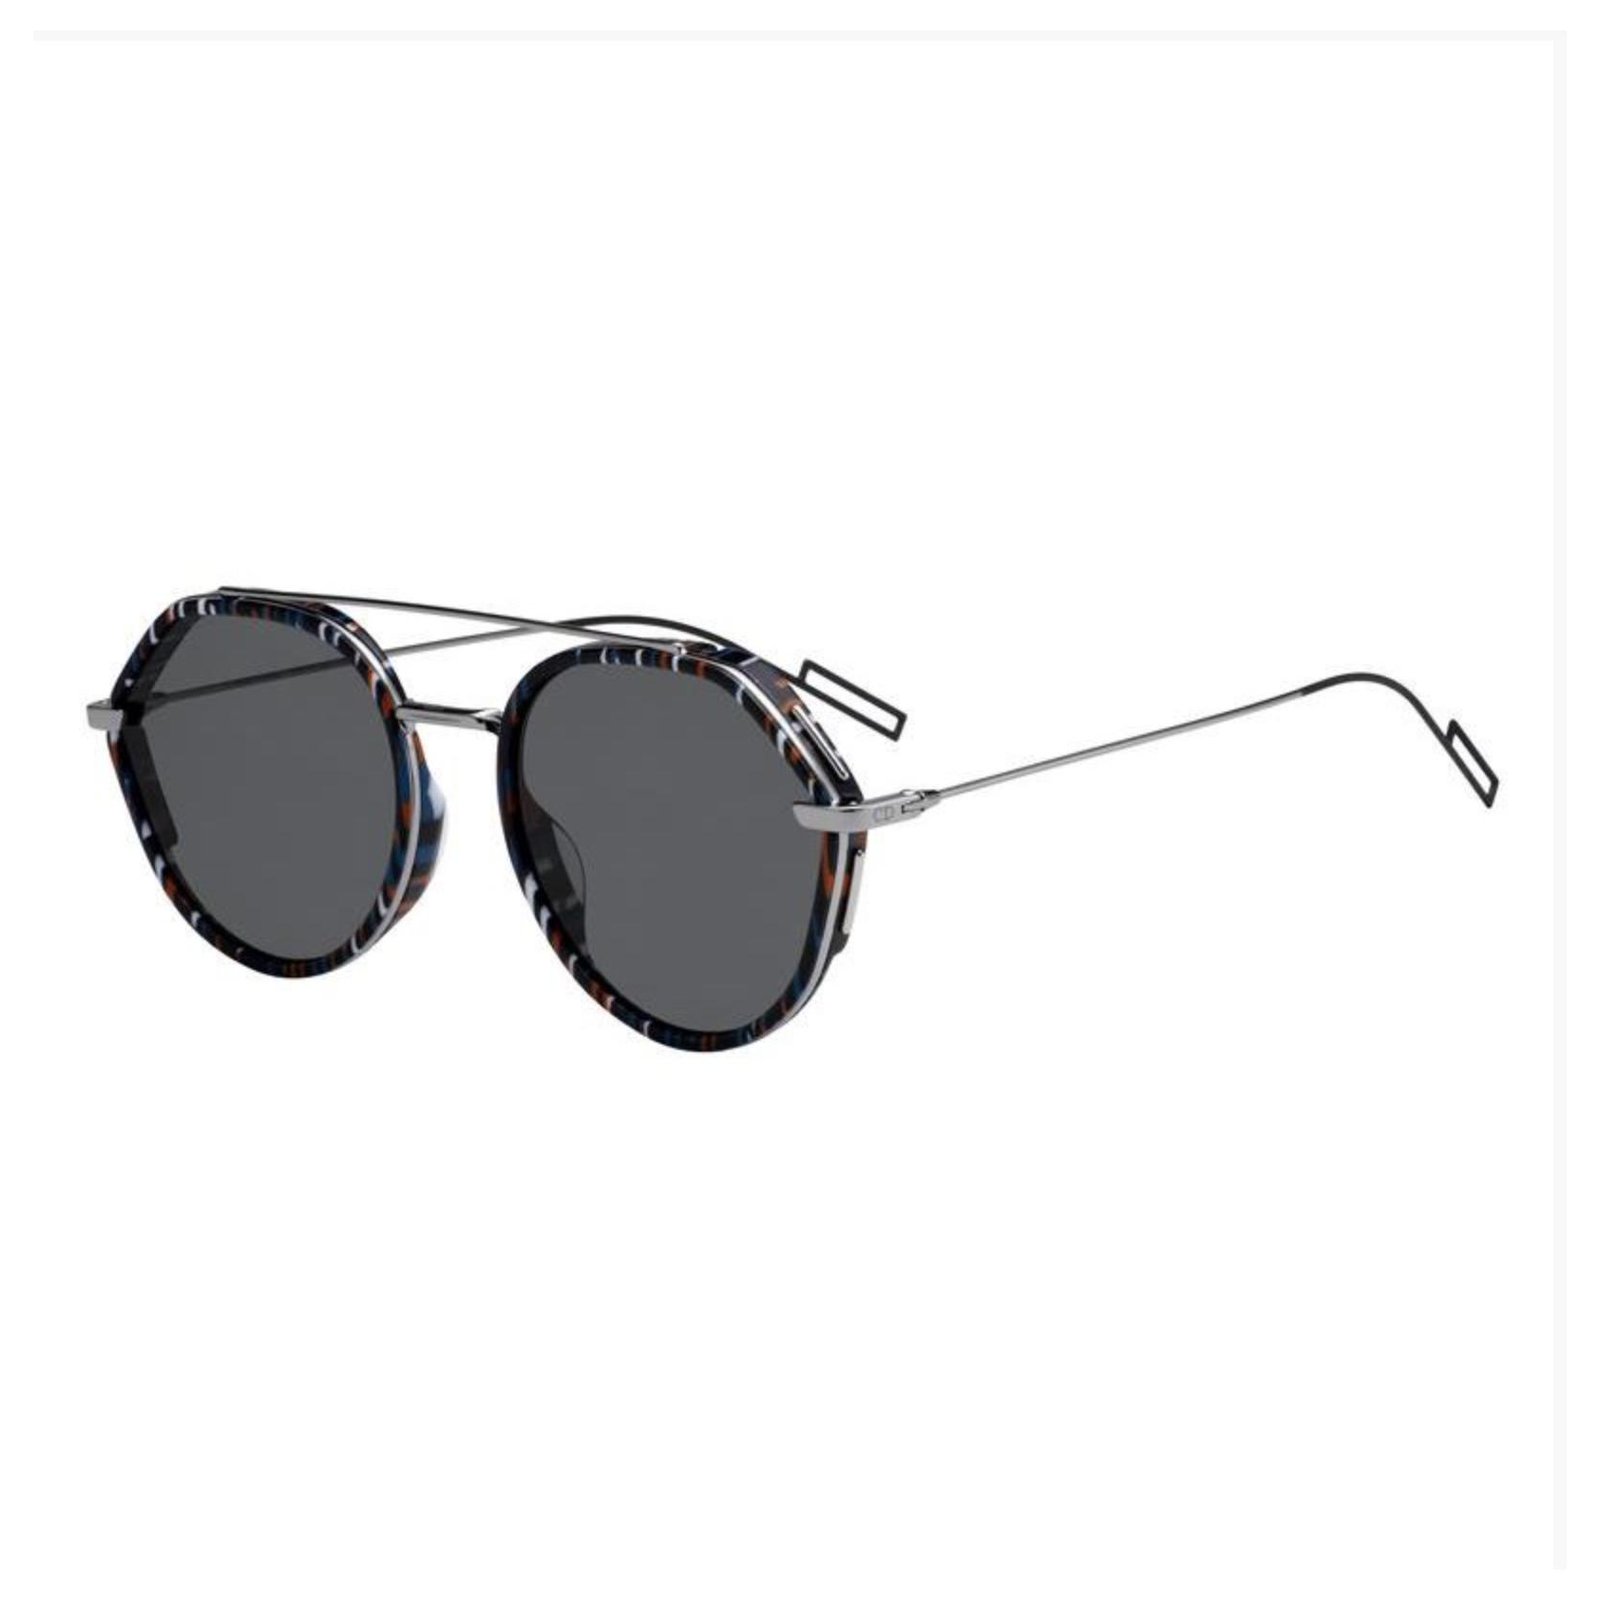 dior metal sunglasses